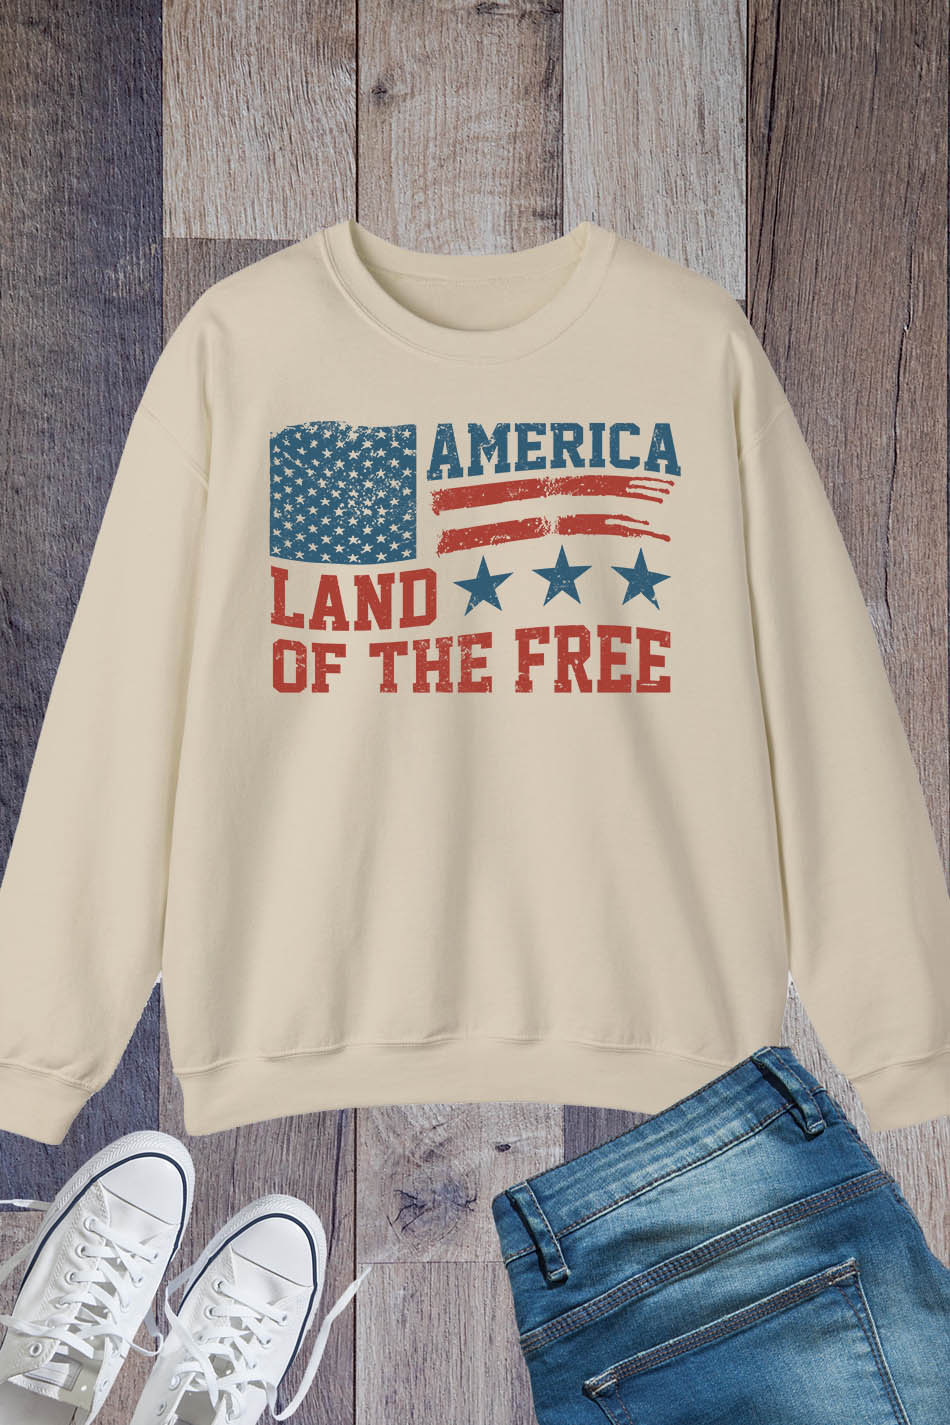 Land Of The Free America Sweatshirts